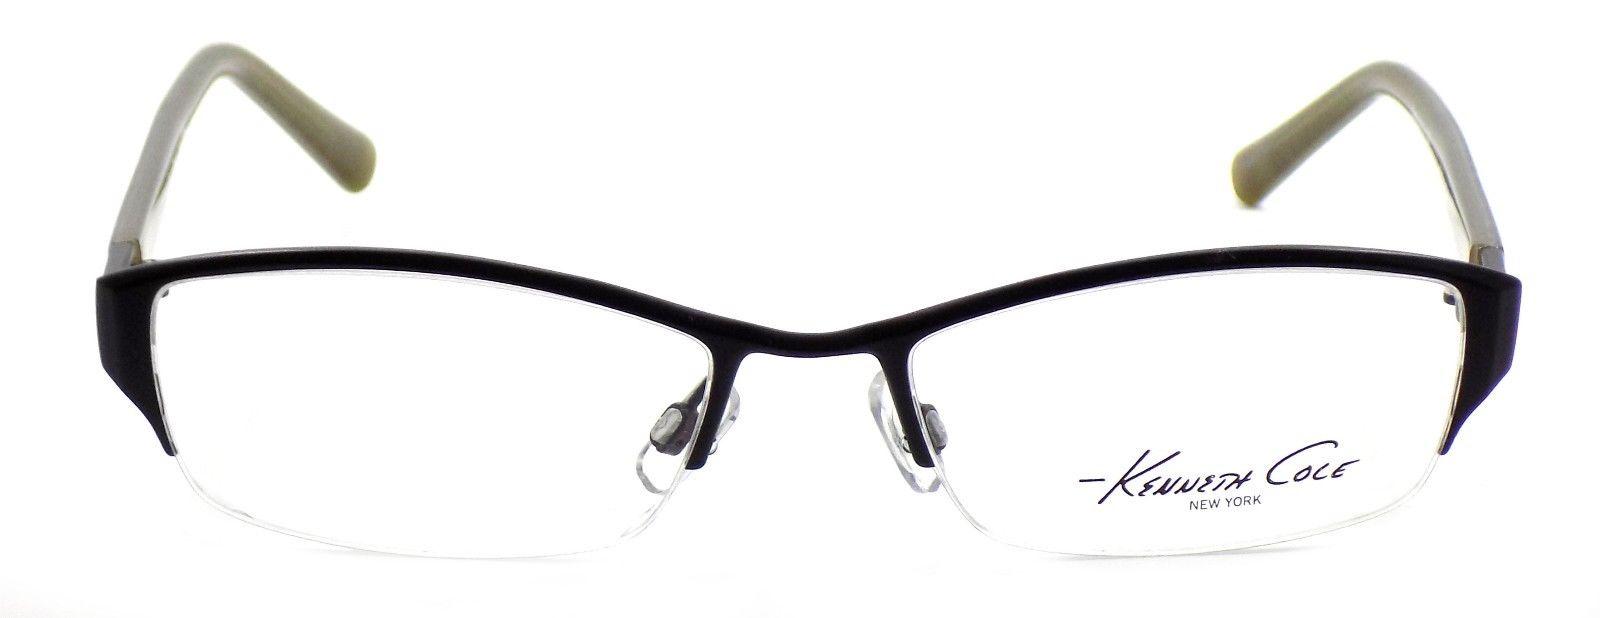 2-Kenneth Cole NY KC160 002 Women's Eyeglasses Frames 51-17-135 Matte Black + CASE-726773164038-IKSpecs